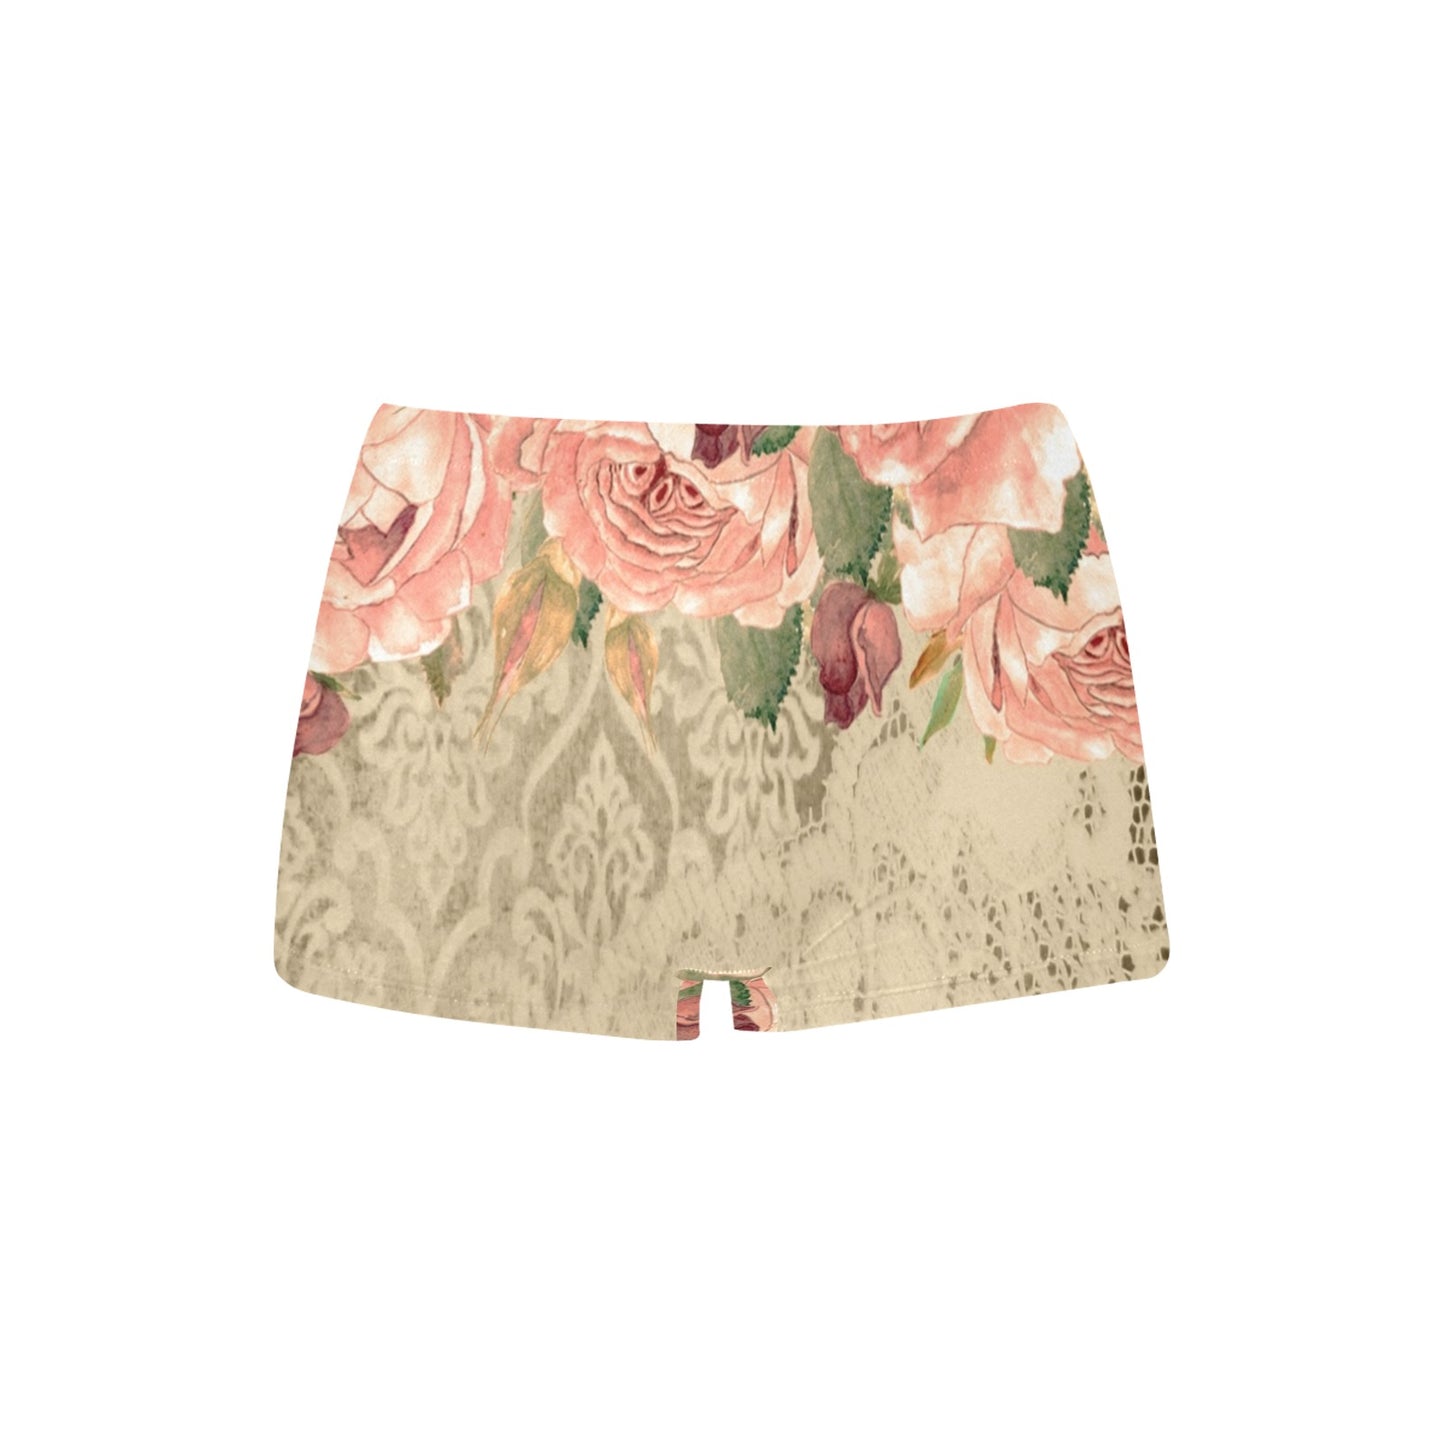 Printed Lace Boyshorts, daisy dukes, pum pum shorts, shortie shorts , design 25